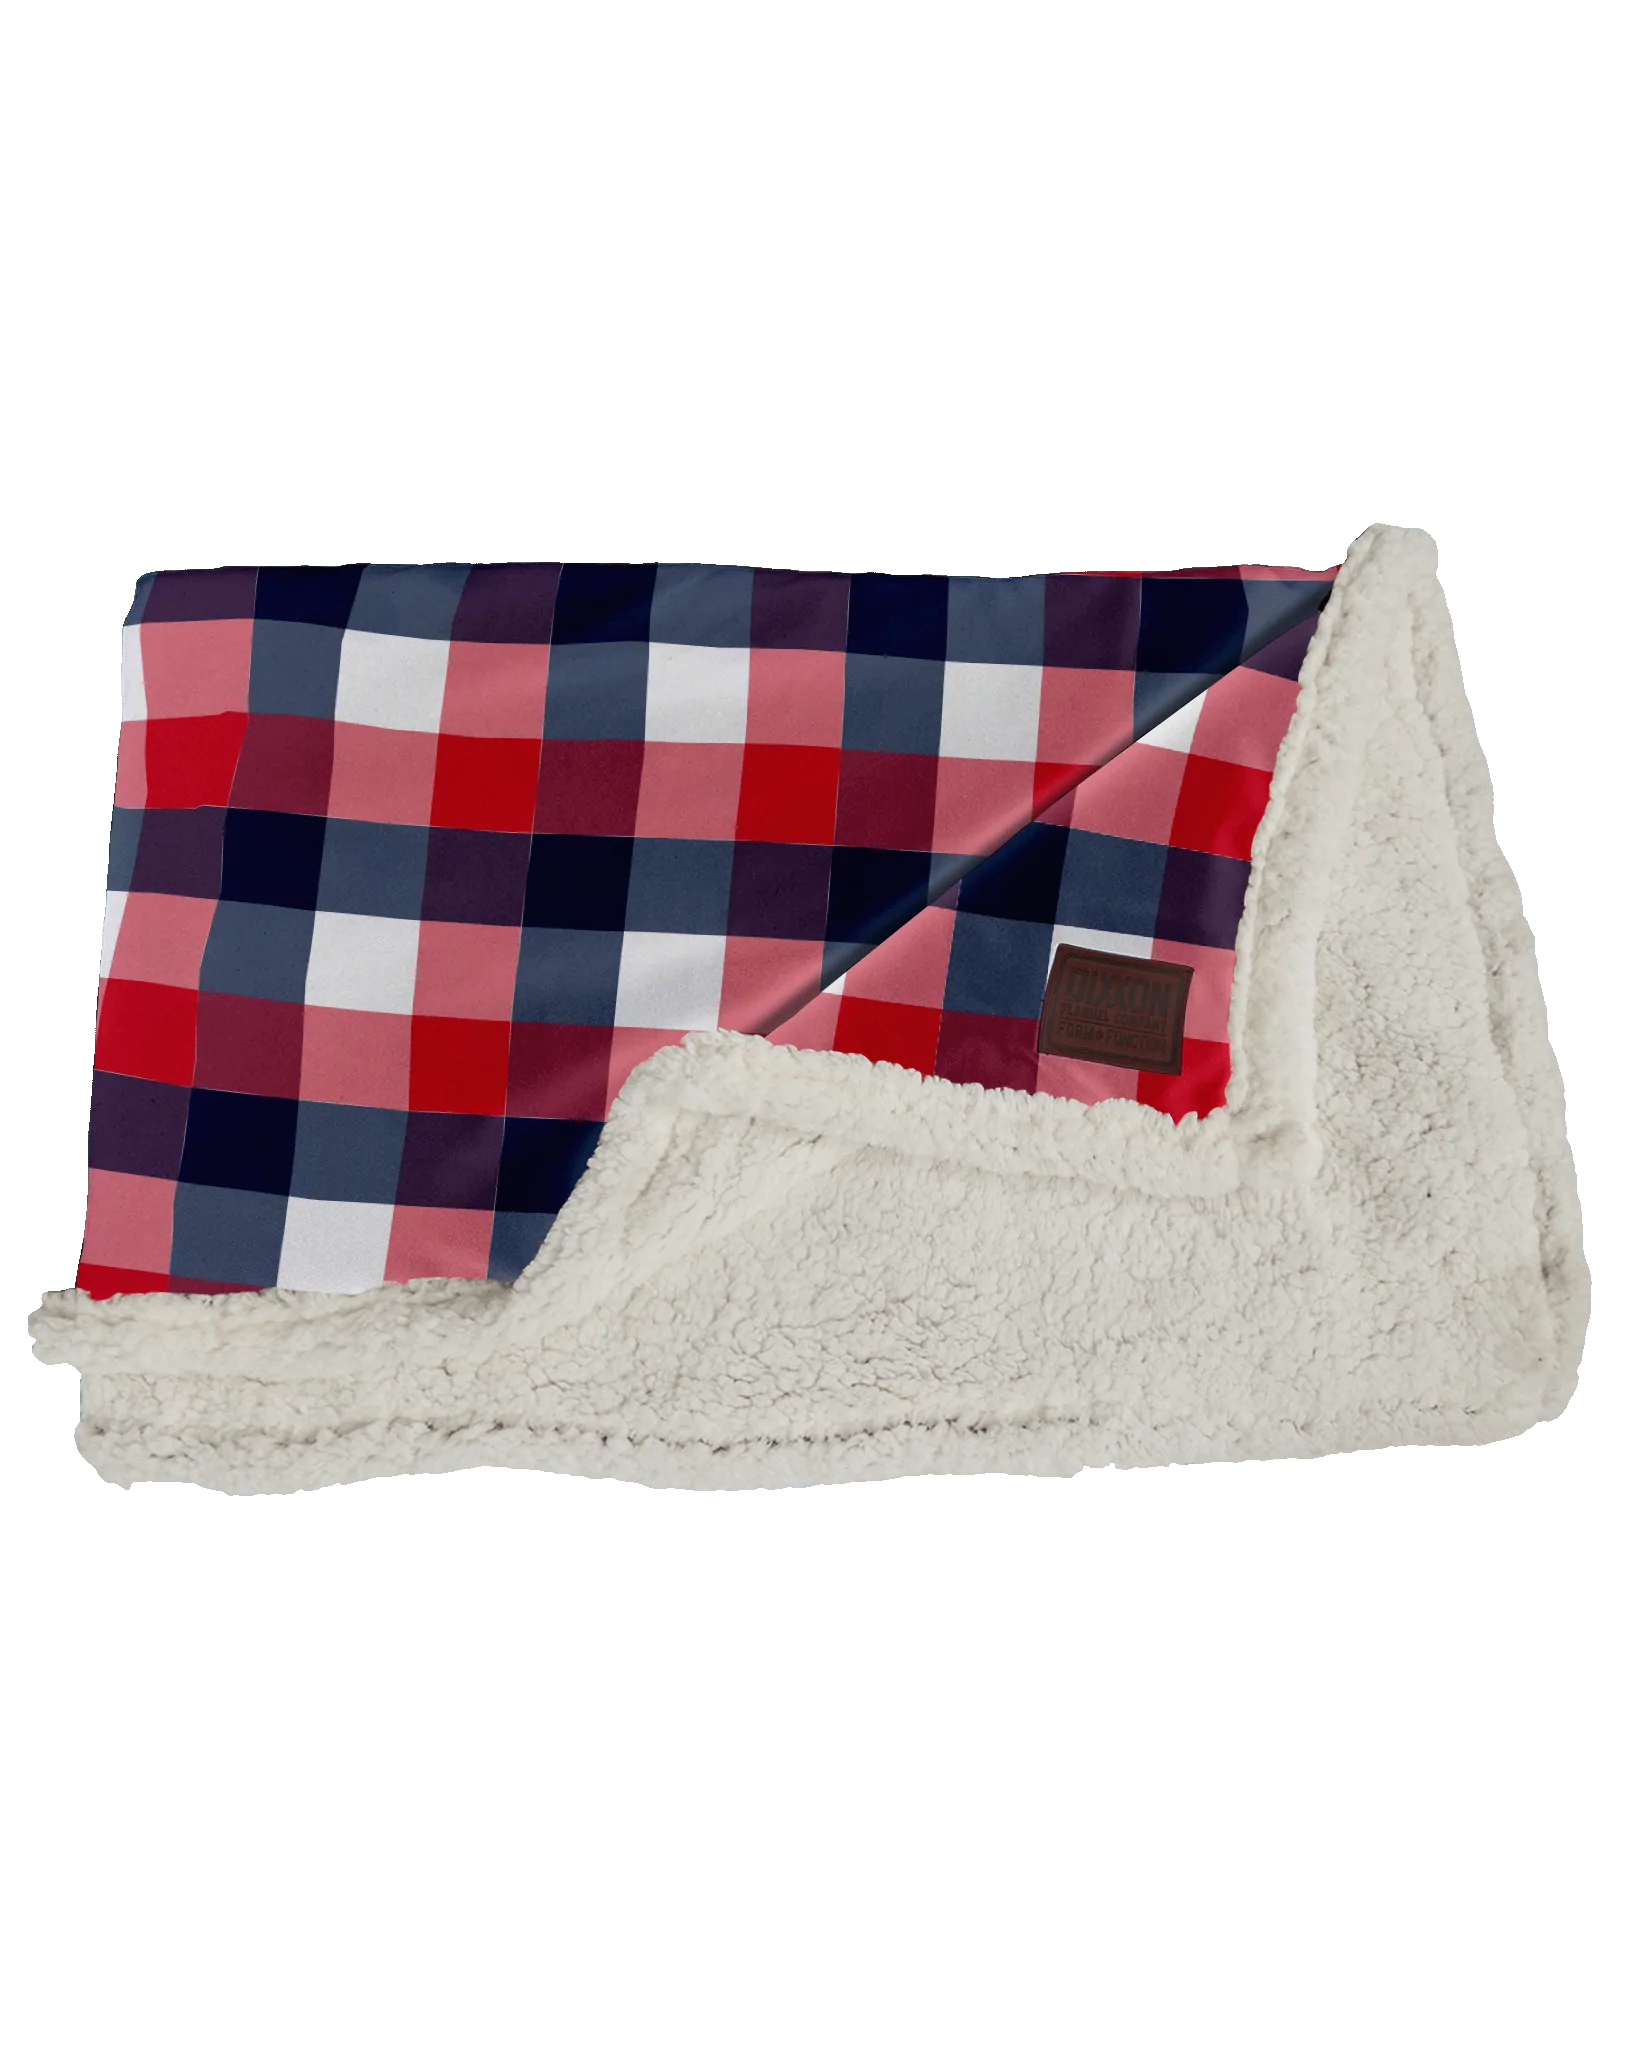 Americana Flannel Sherpa Blanket by Dixxon Flannel Co. - Harley Davidson of Quantico